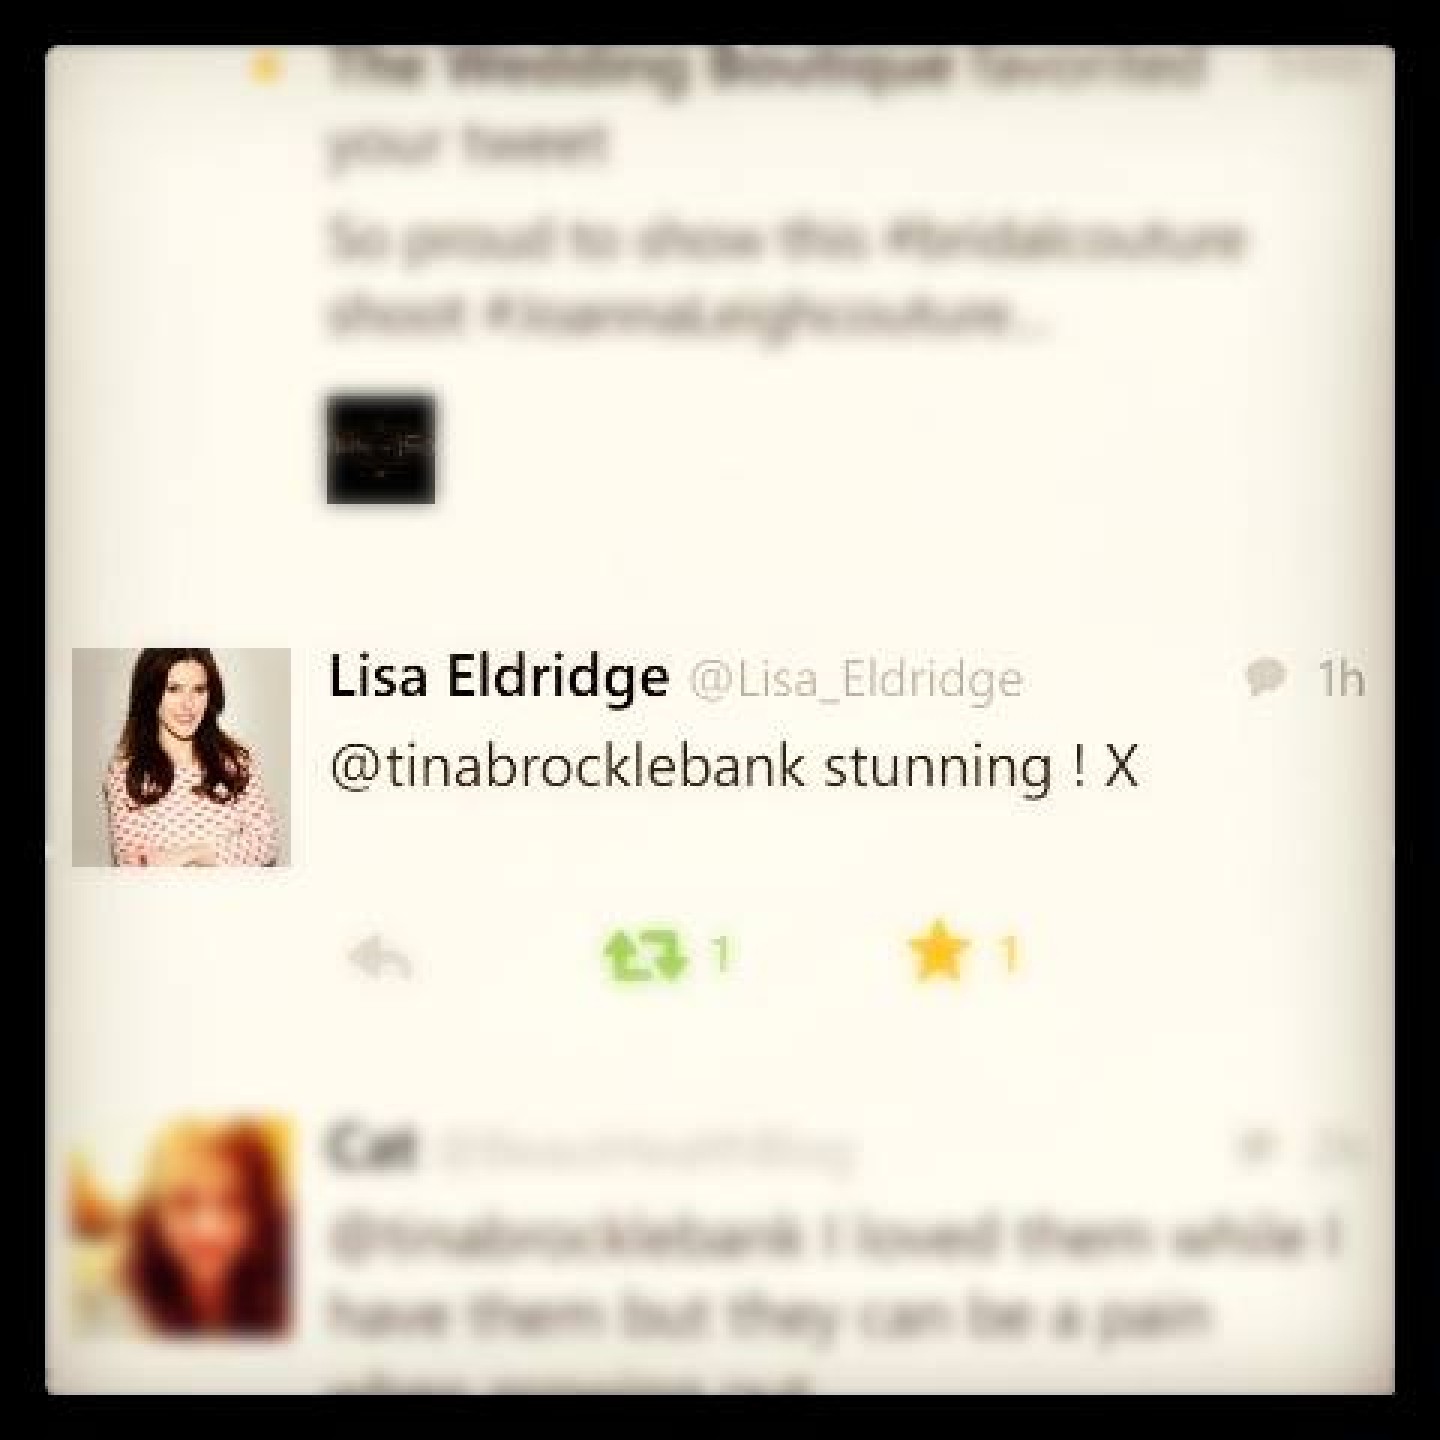 Lisa Eldridge tweet